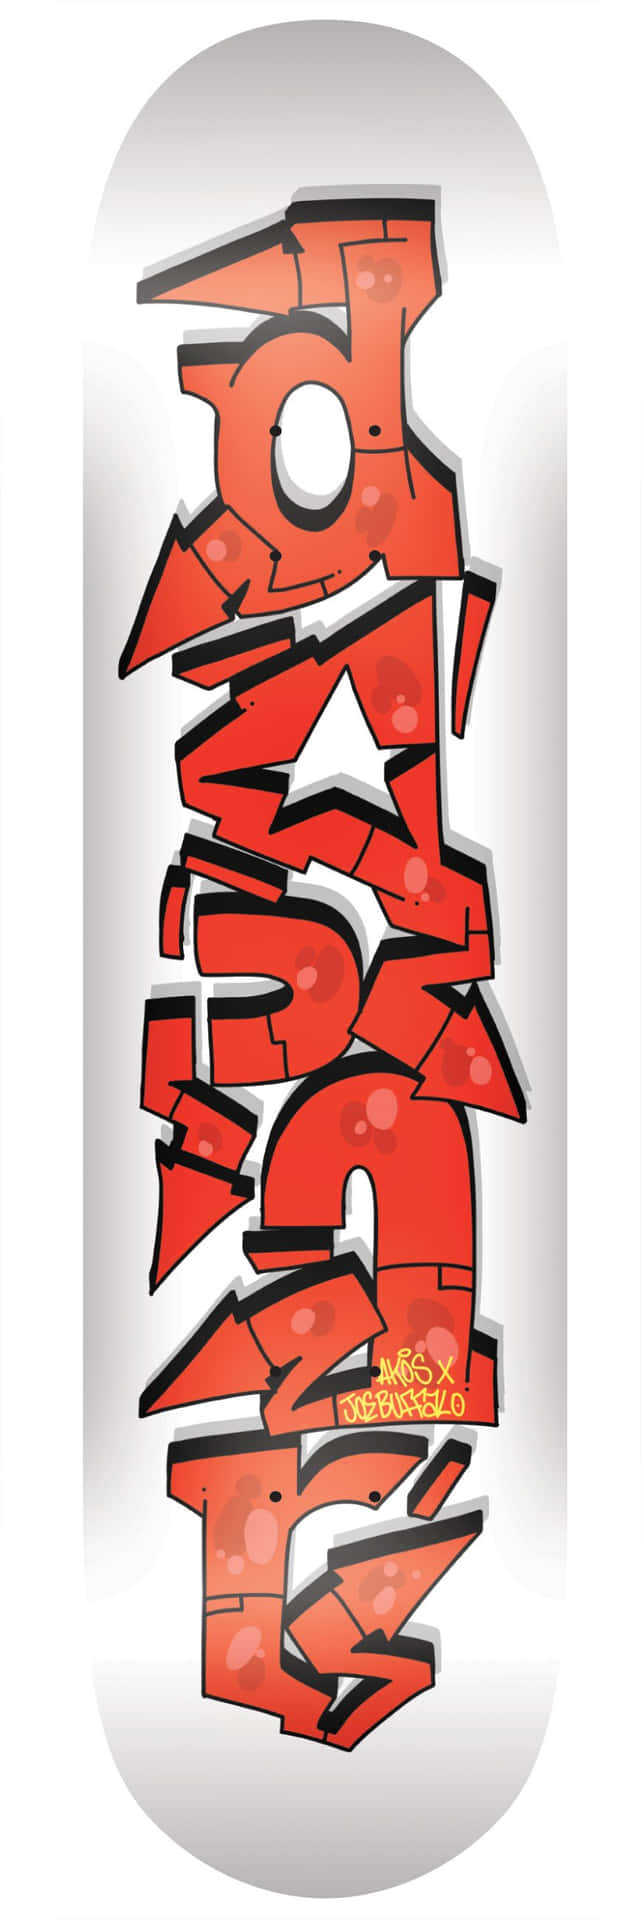 Red Graffiti Art Skateboard Deck Wallpaper